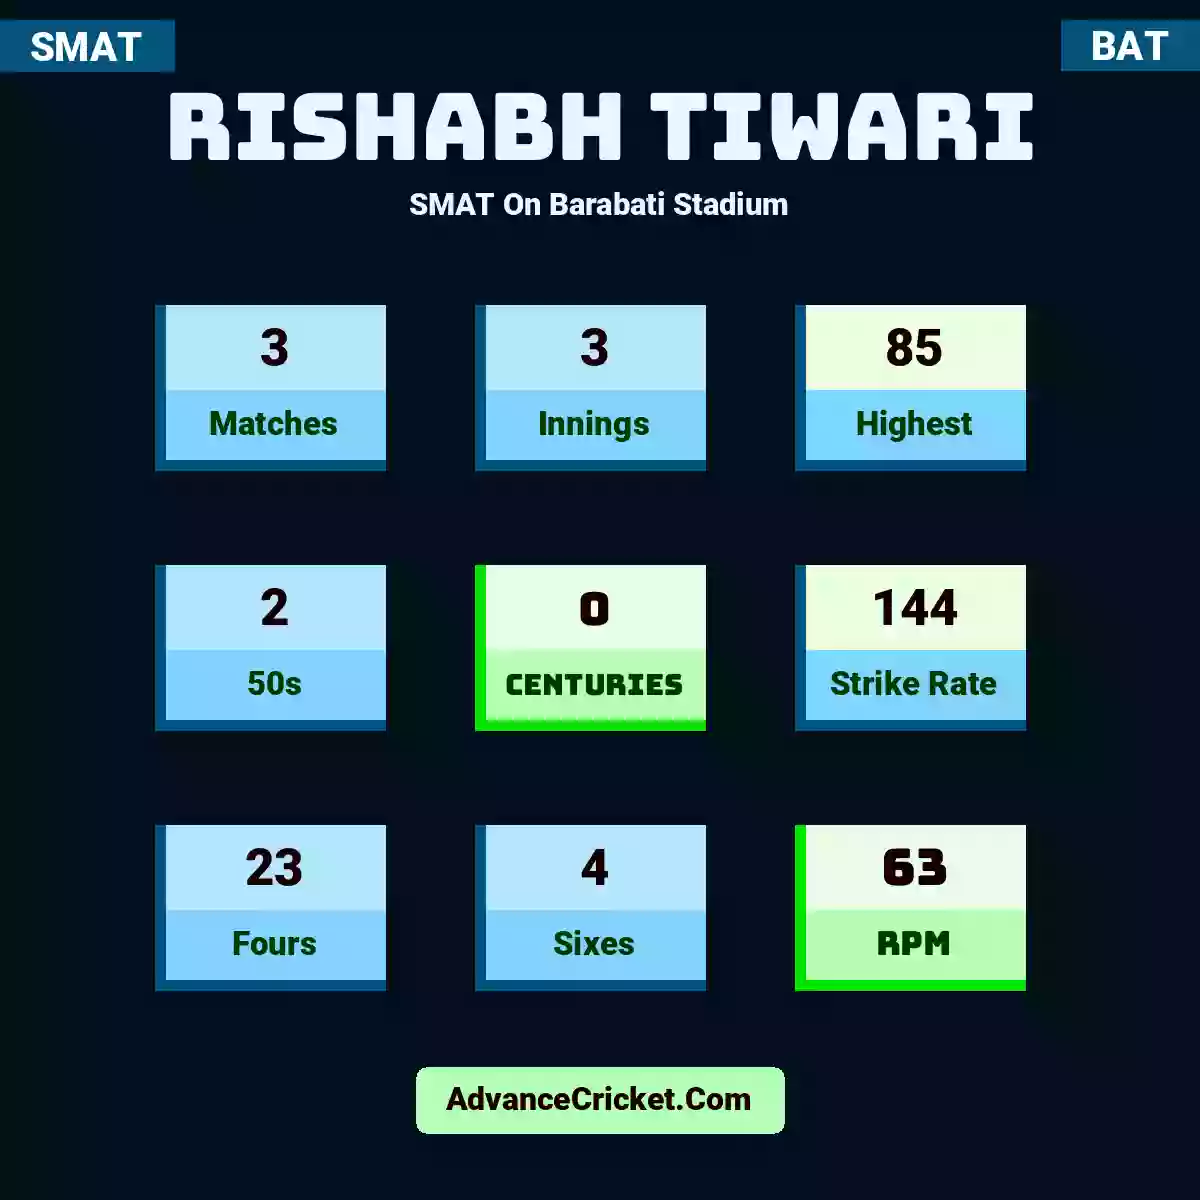 Rishabh Tiwari SMAT  On Barabati Stadium, Rishabh Tiwari played 3 matches, scored 85 runs as highest, 2 half-centuries, and 0 centuries, with a strike rate of 144. R.Tiwari hit 23 fours and 4 sixes, with an RPM of 63.